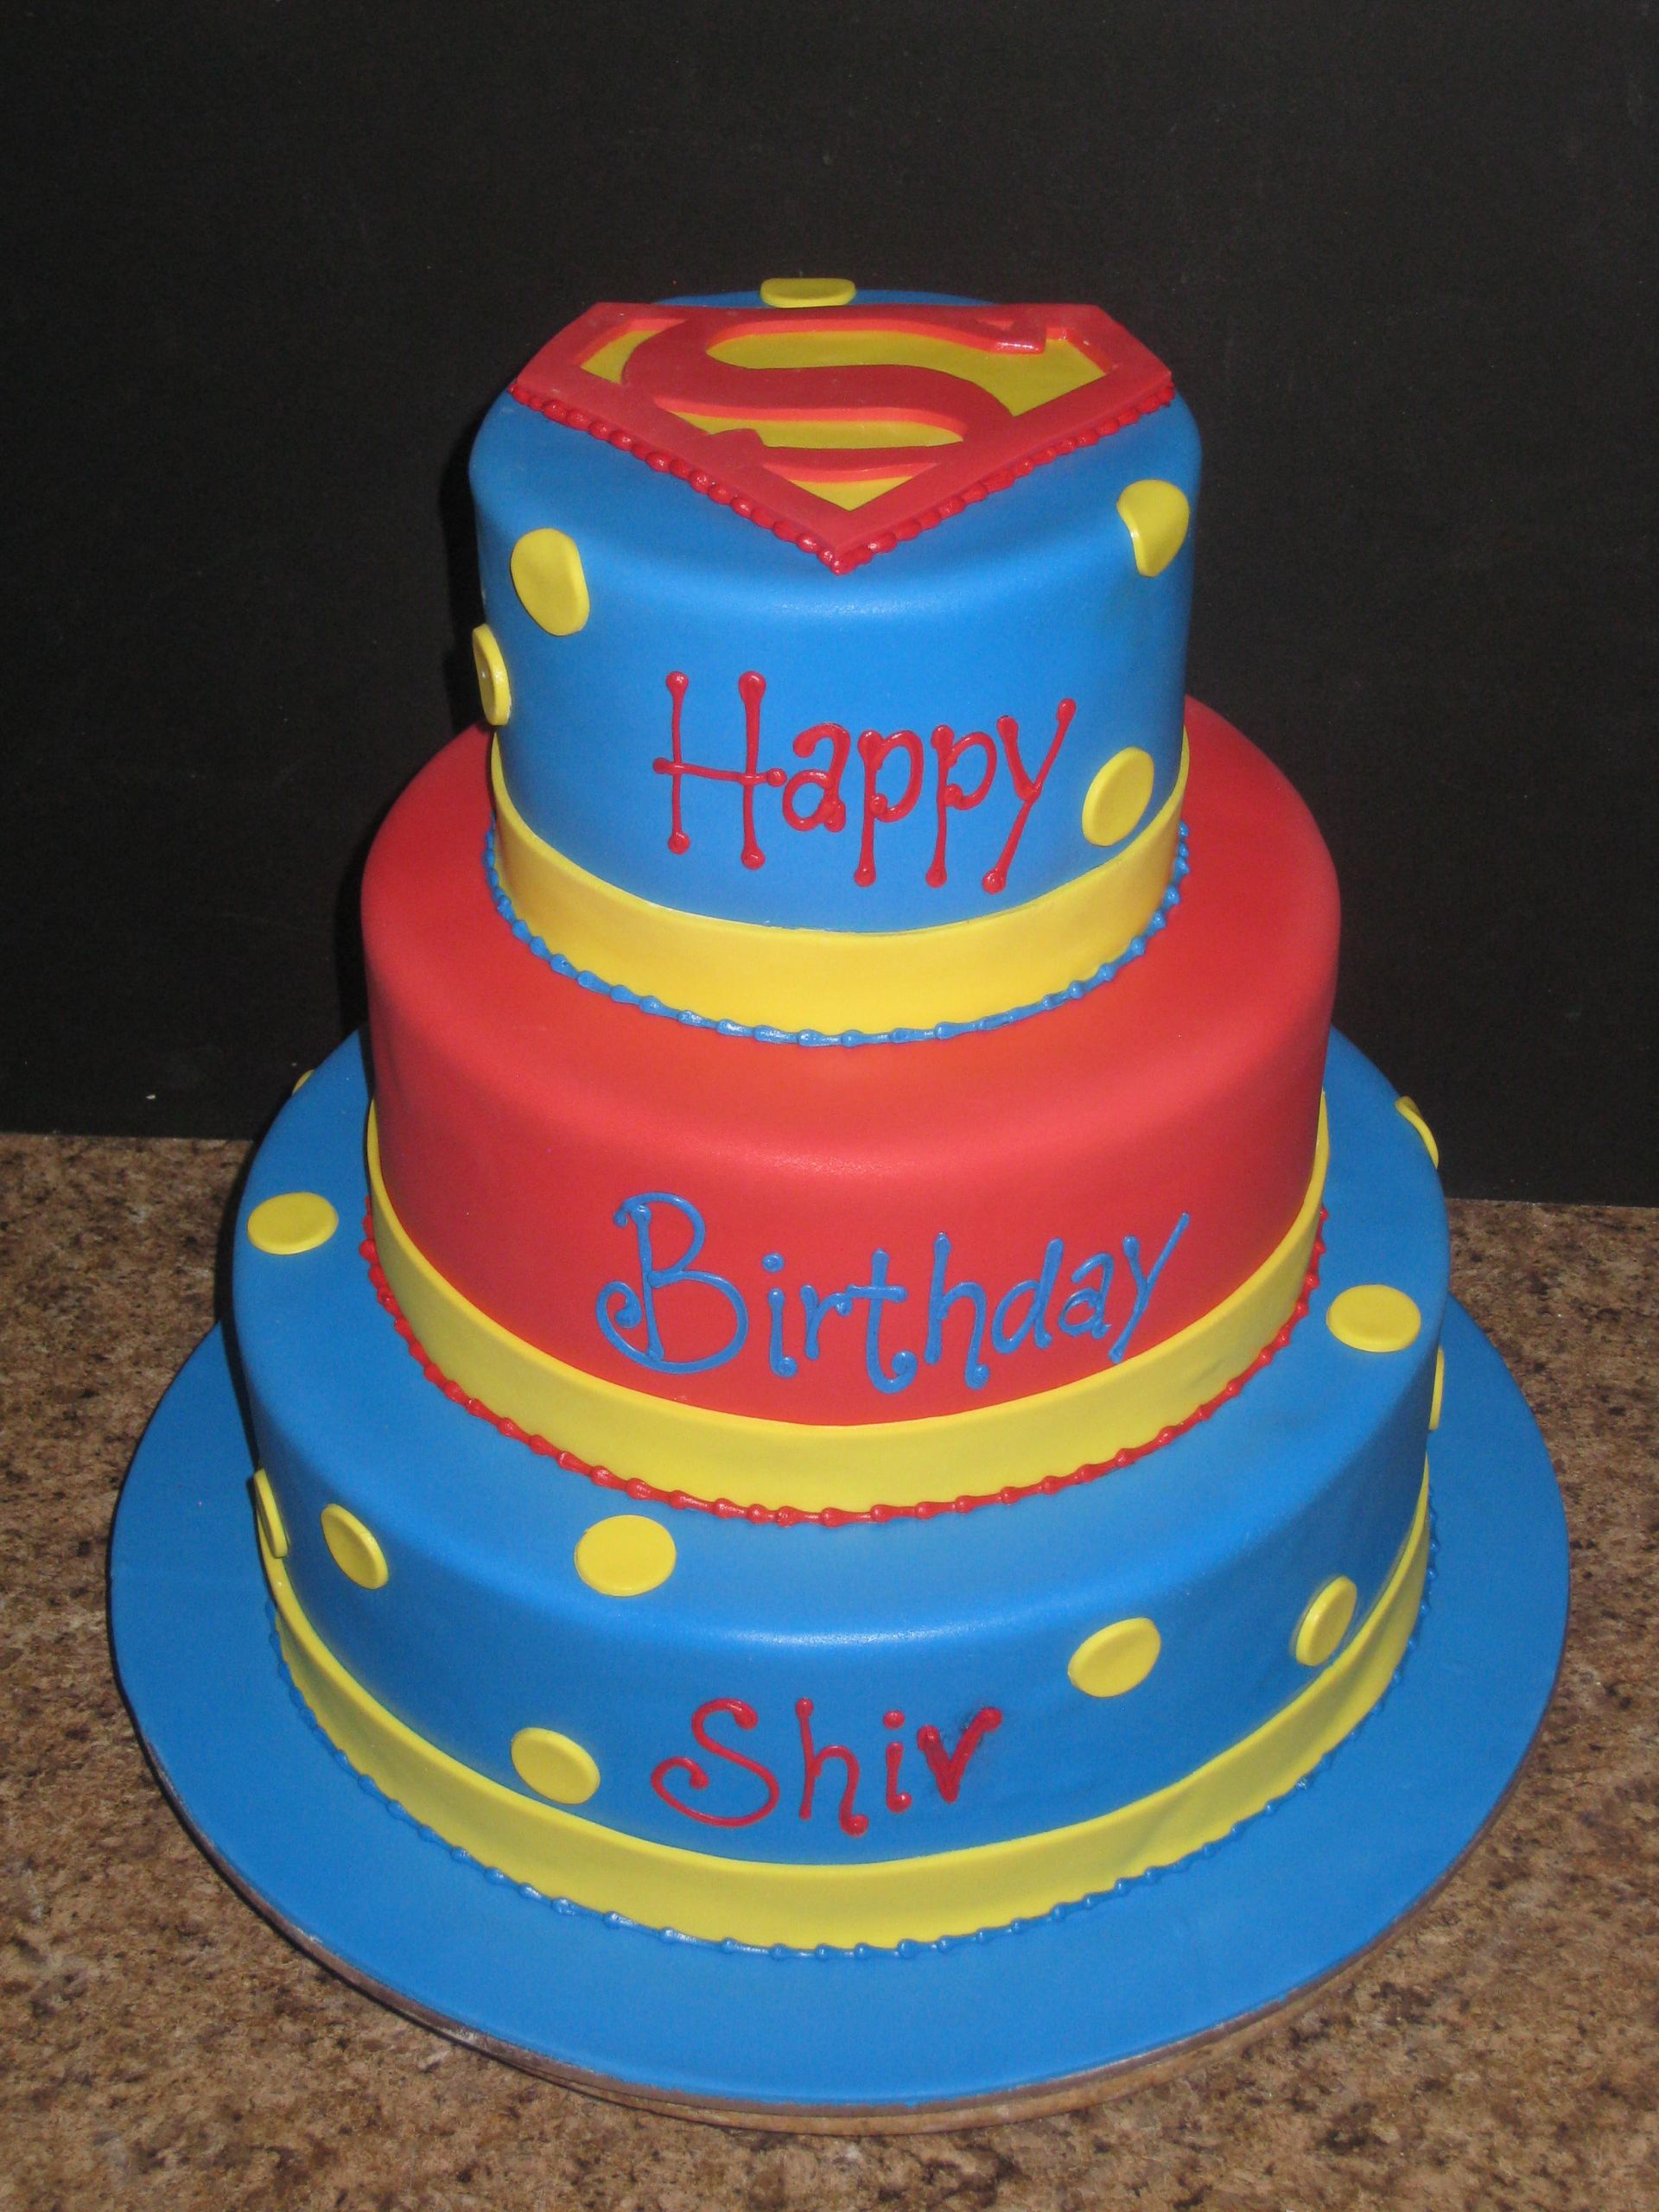 Superman Birthday Cakes
 Superman Cakes – Decoration Ideas